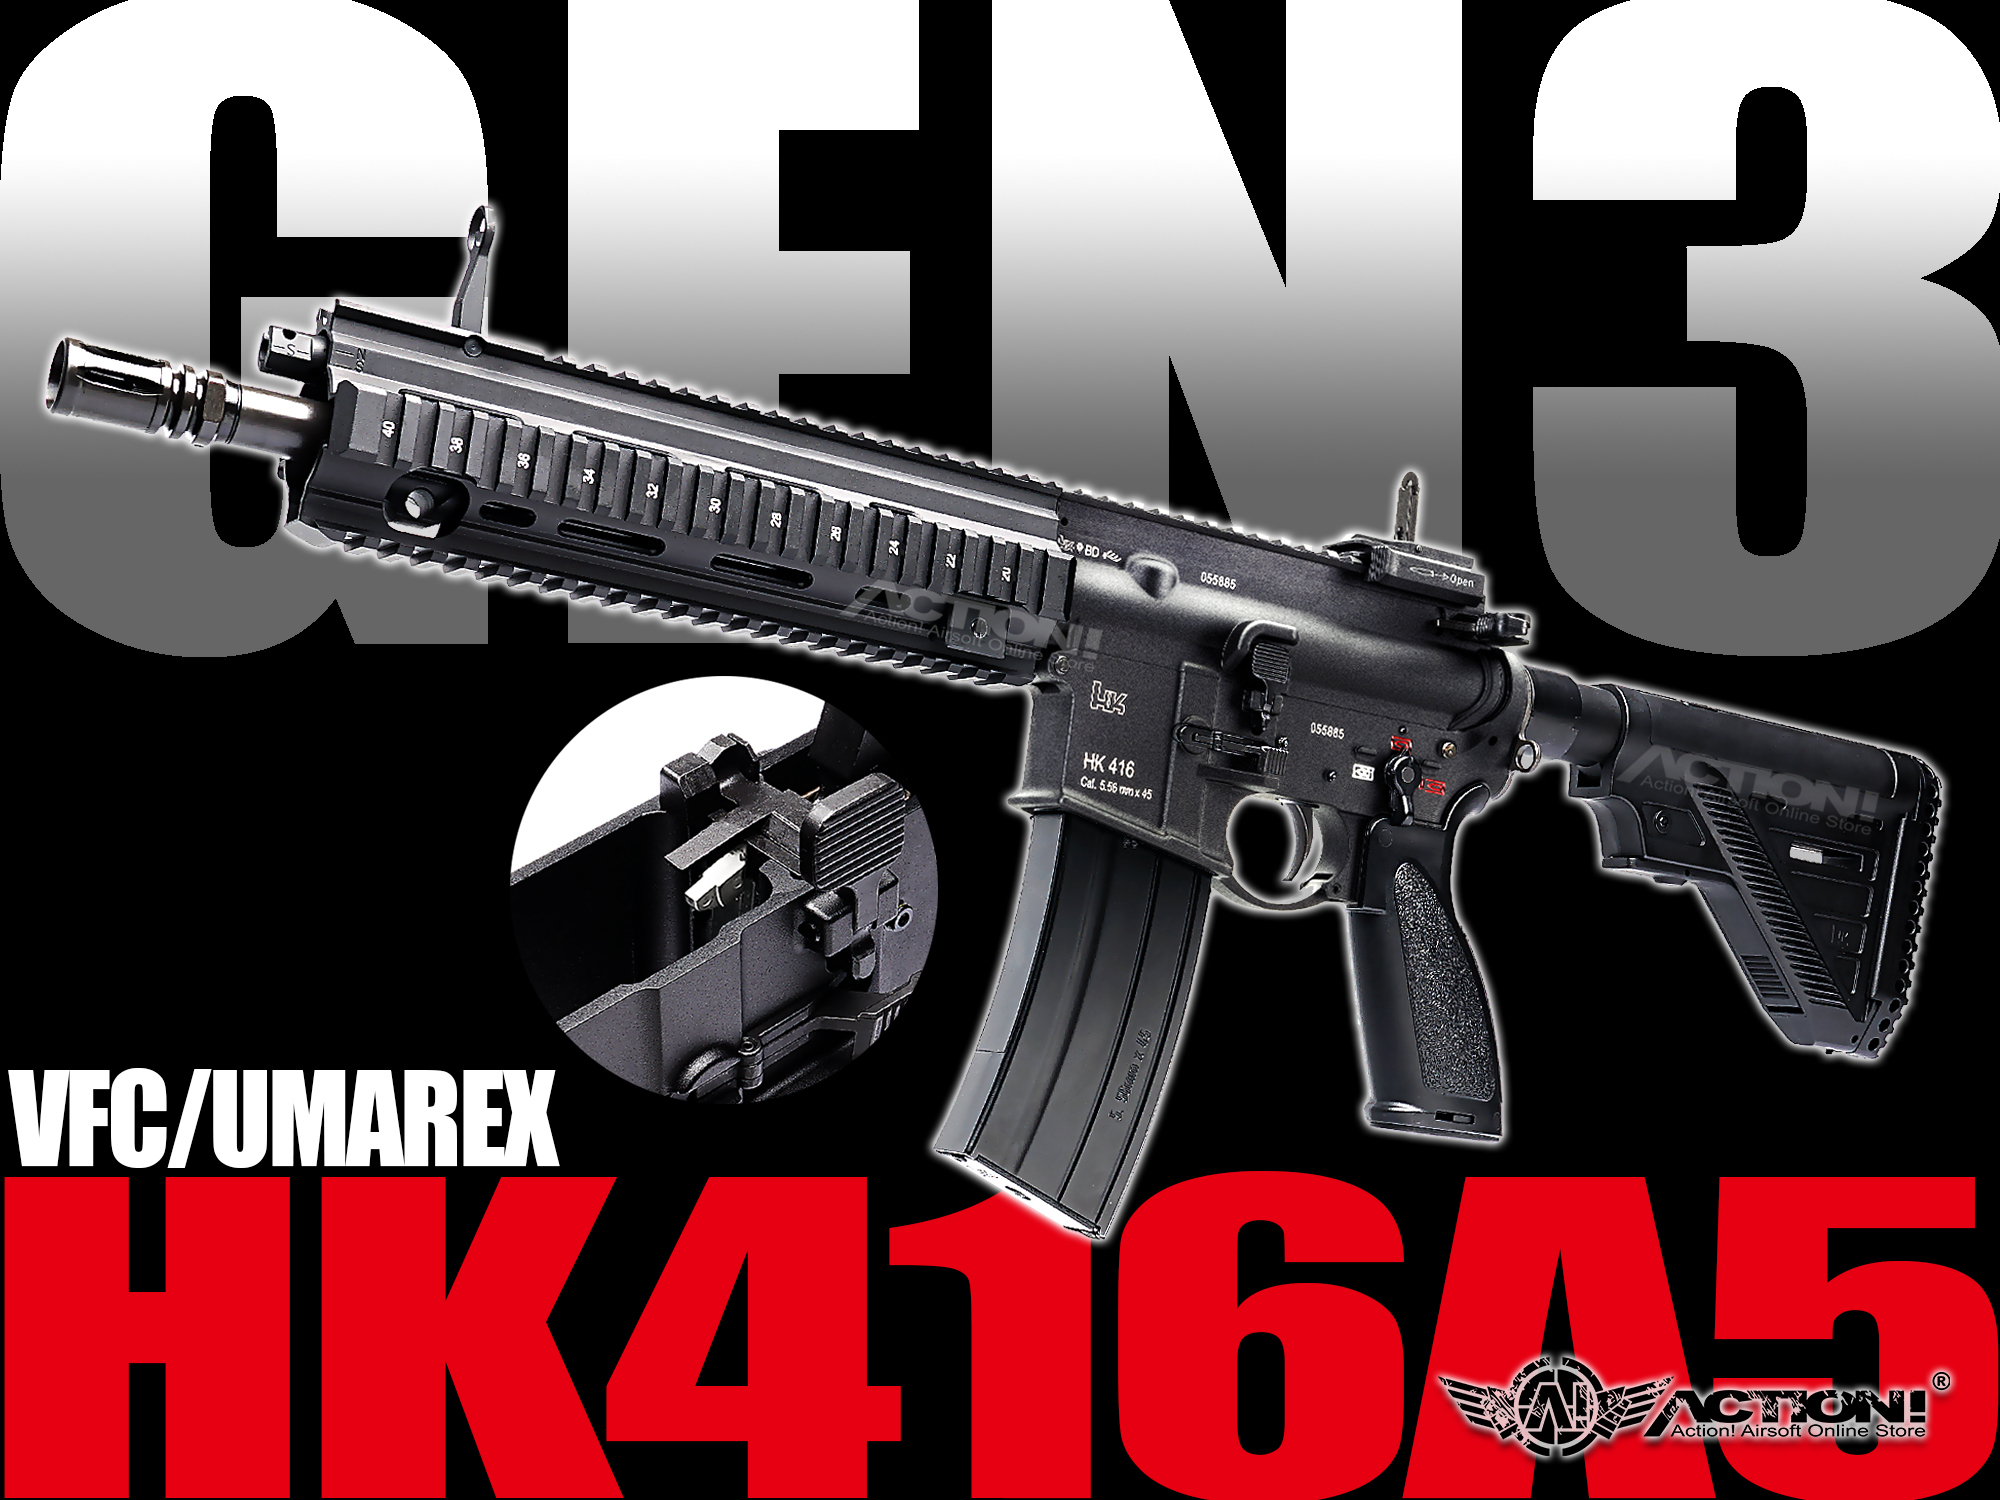 VFC/Umarex - HK416A5 Gen3 /V3 GBB氣動槍(黑色)